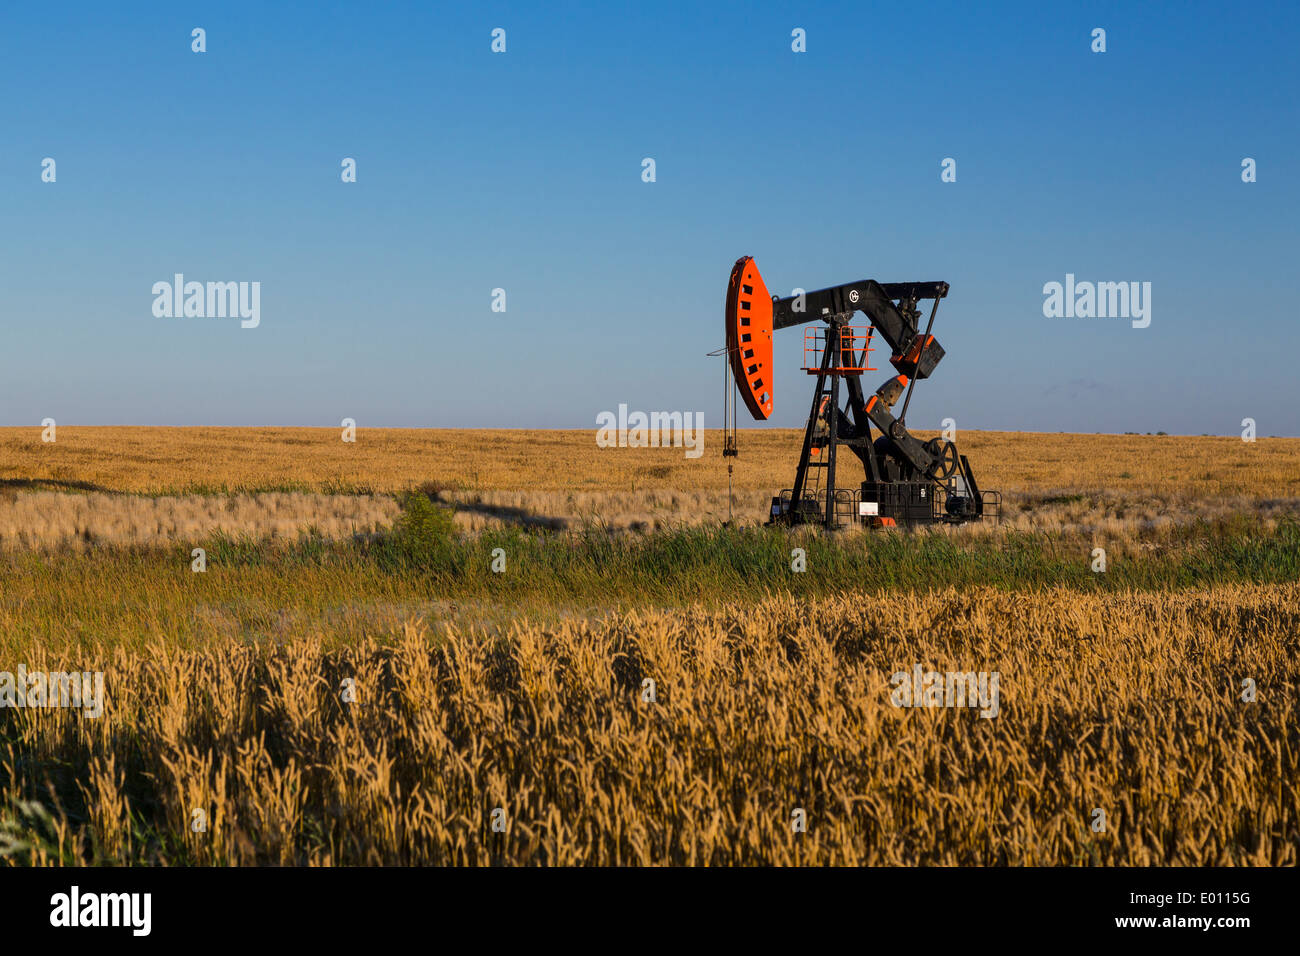 An oil production pump jack in the Bakken play oil field deposits near Stoughton, Saskatchewan, Canada. Stock Photo